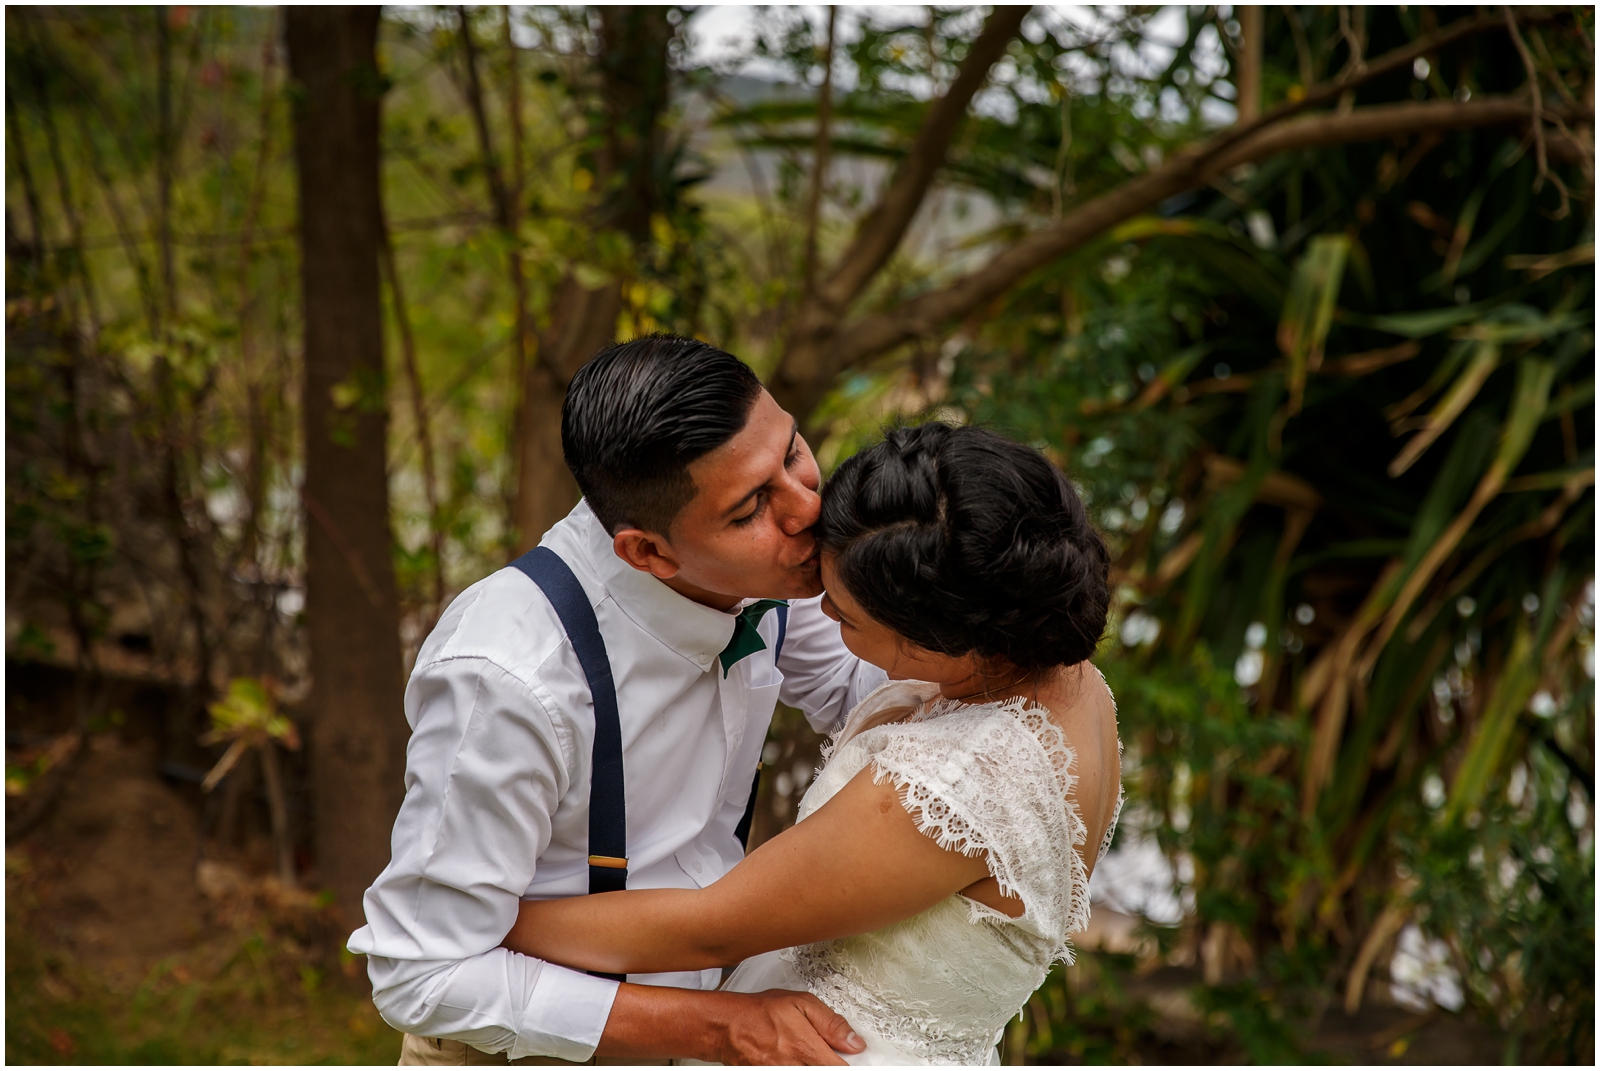 A couple having fun on their Nicaraguan wedding day.